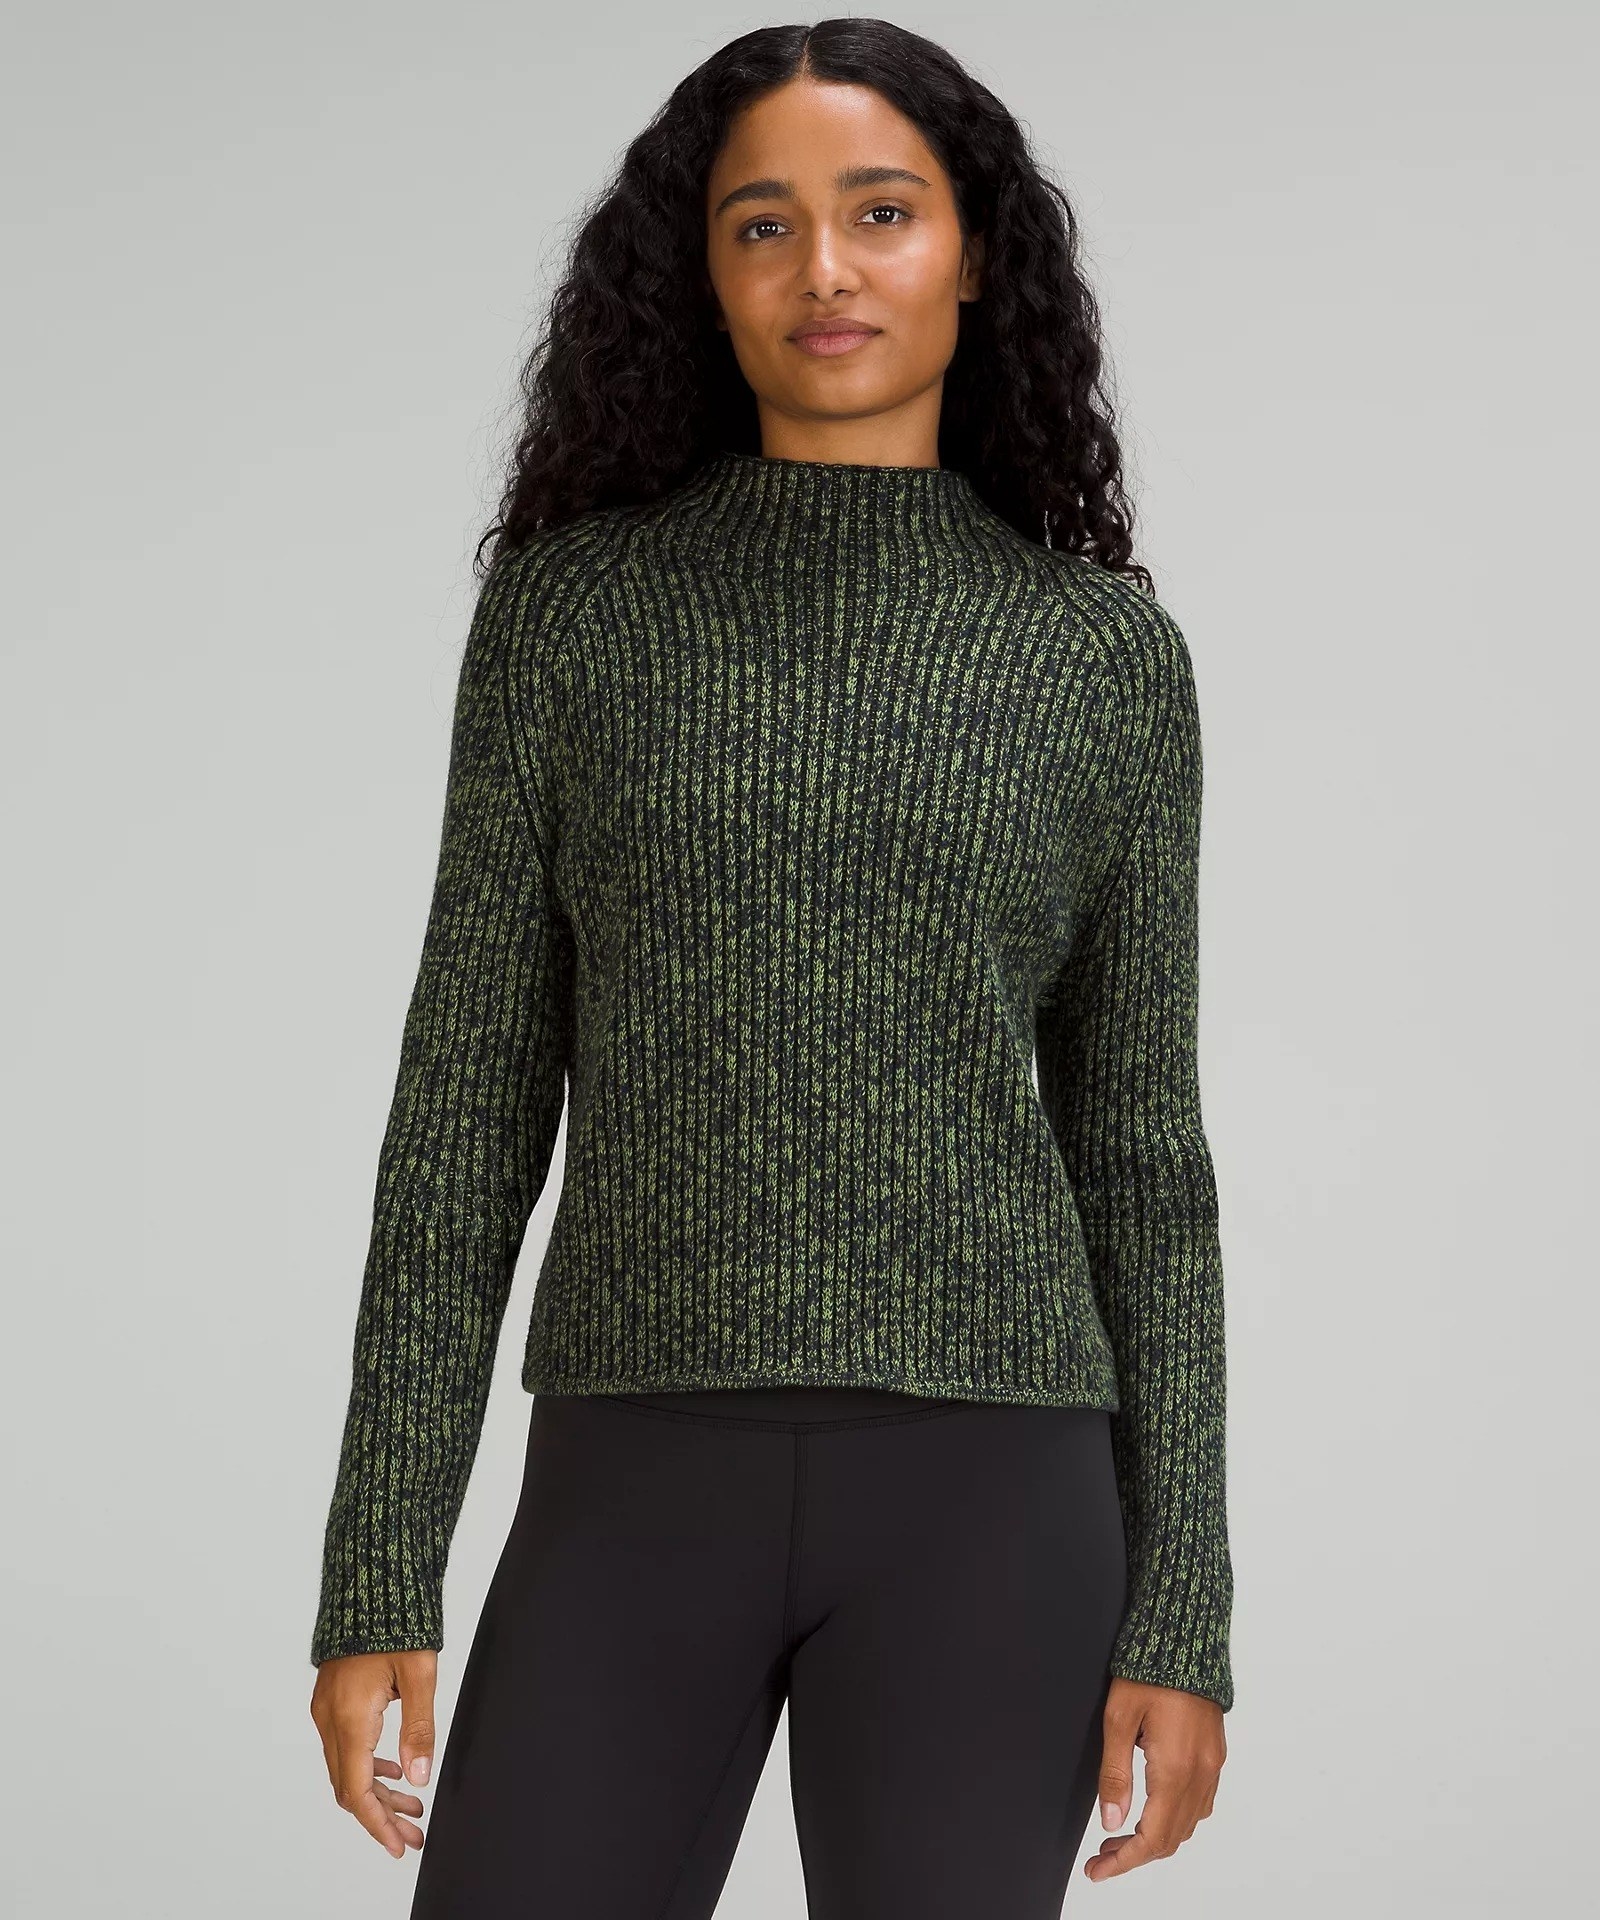 model wearing the sweater in green